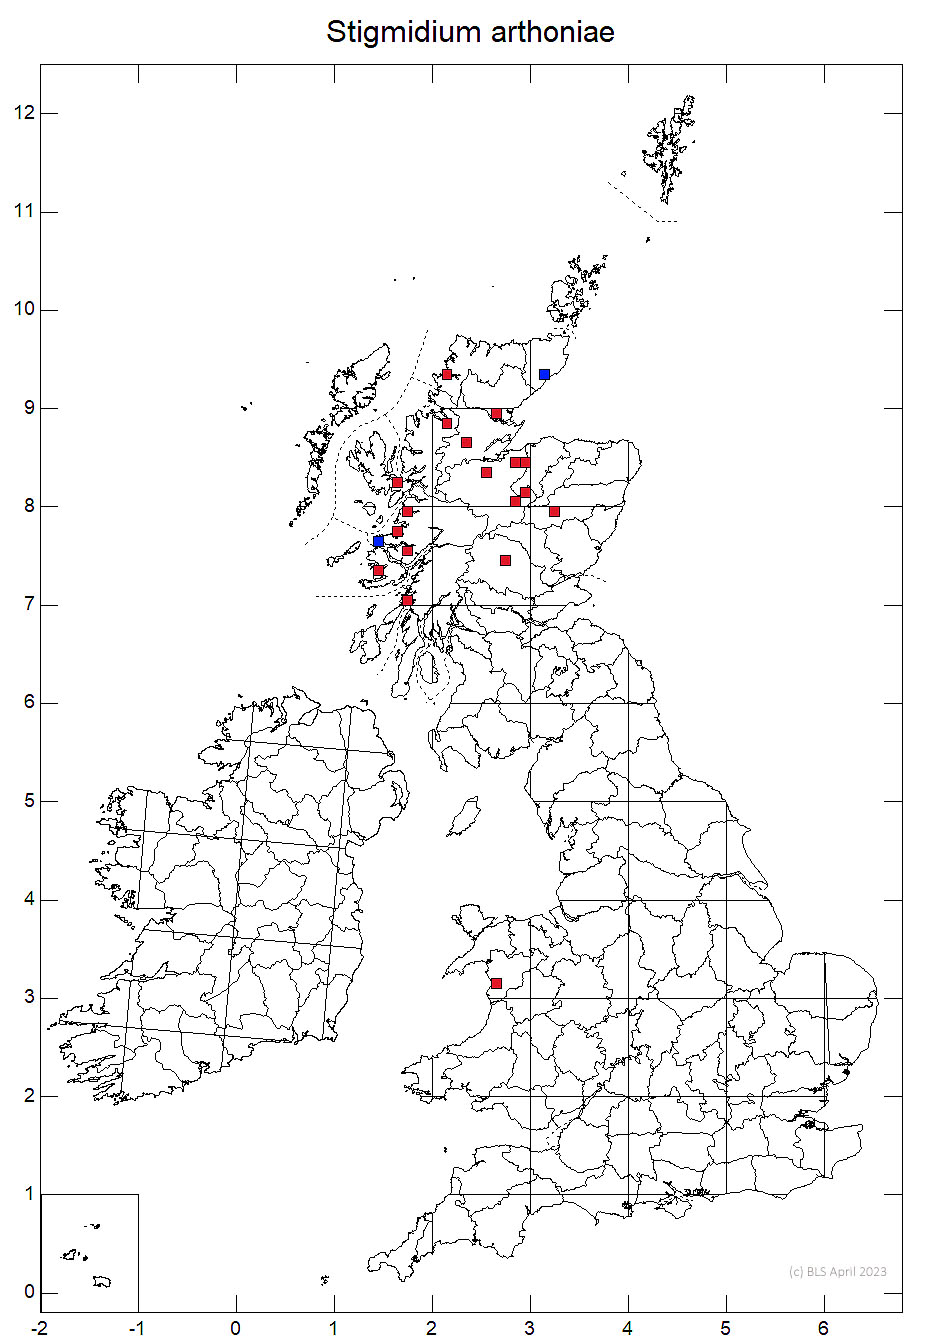 Stigmidium arthoniae 10km sq distribution map